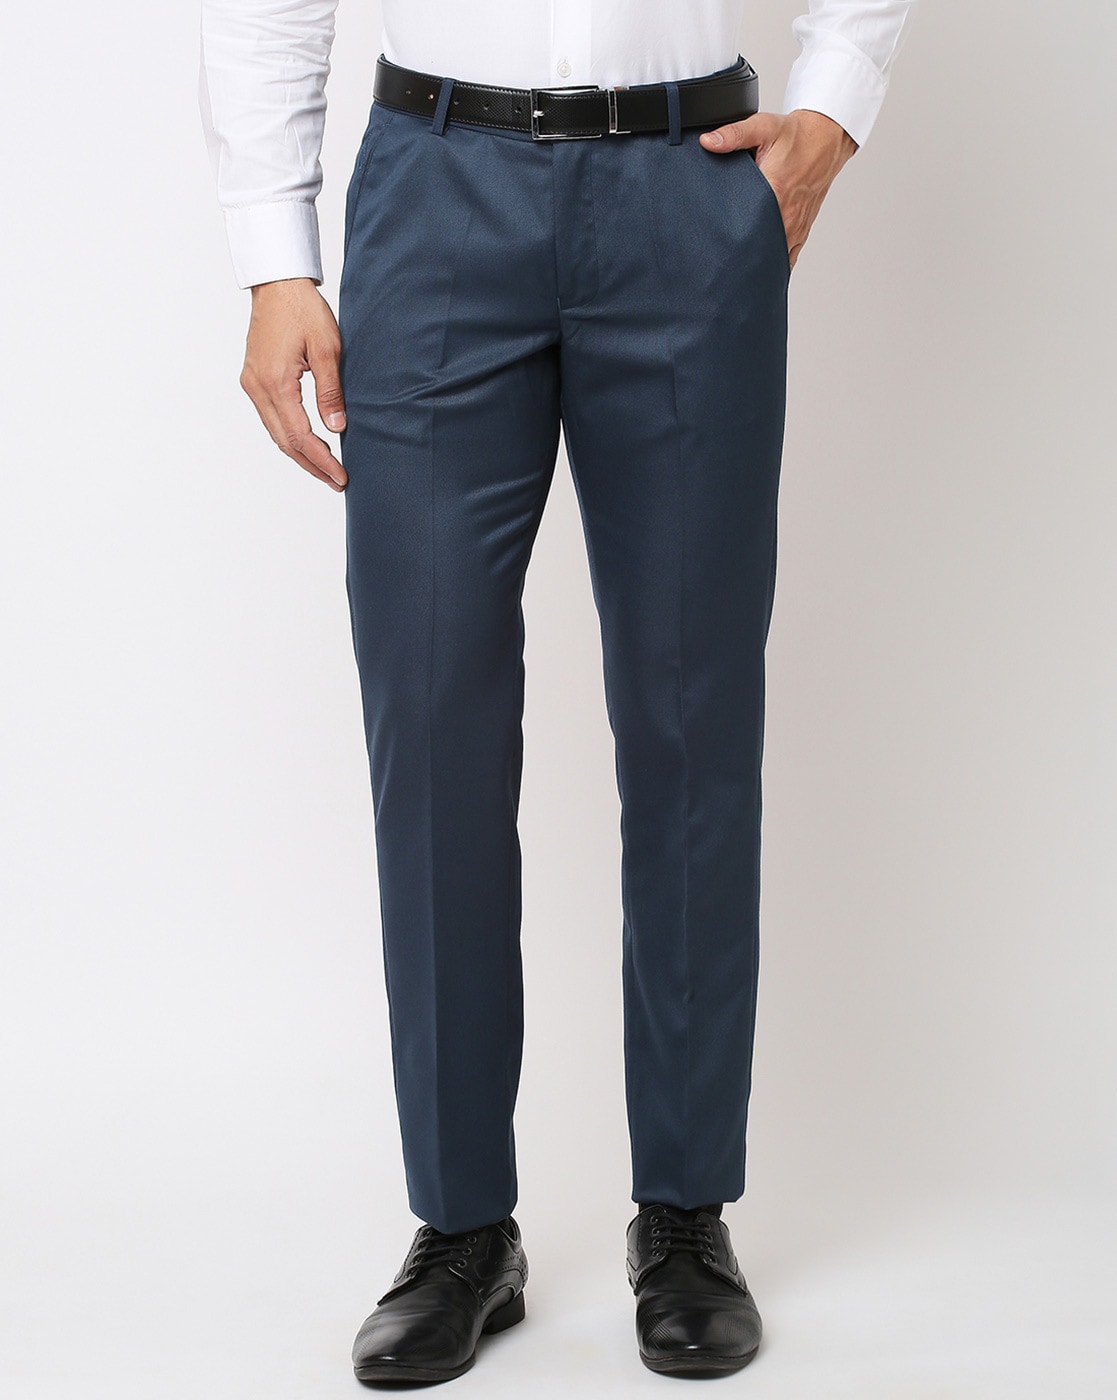 Buy Blue Trousers & Pants for Men by R&B Online | Ajio.com